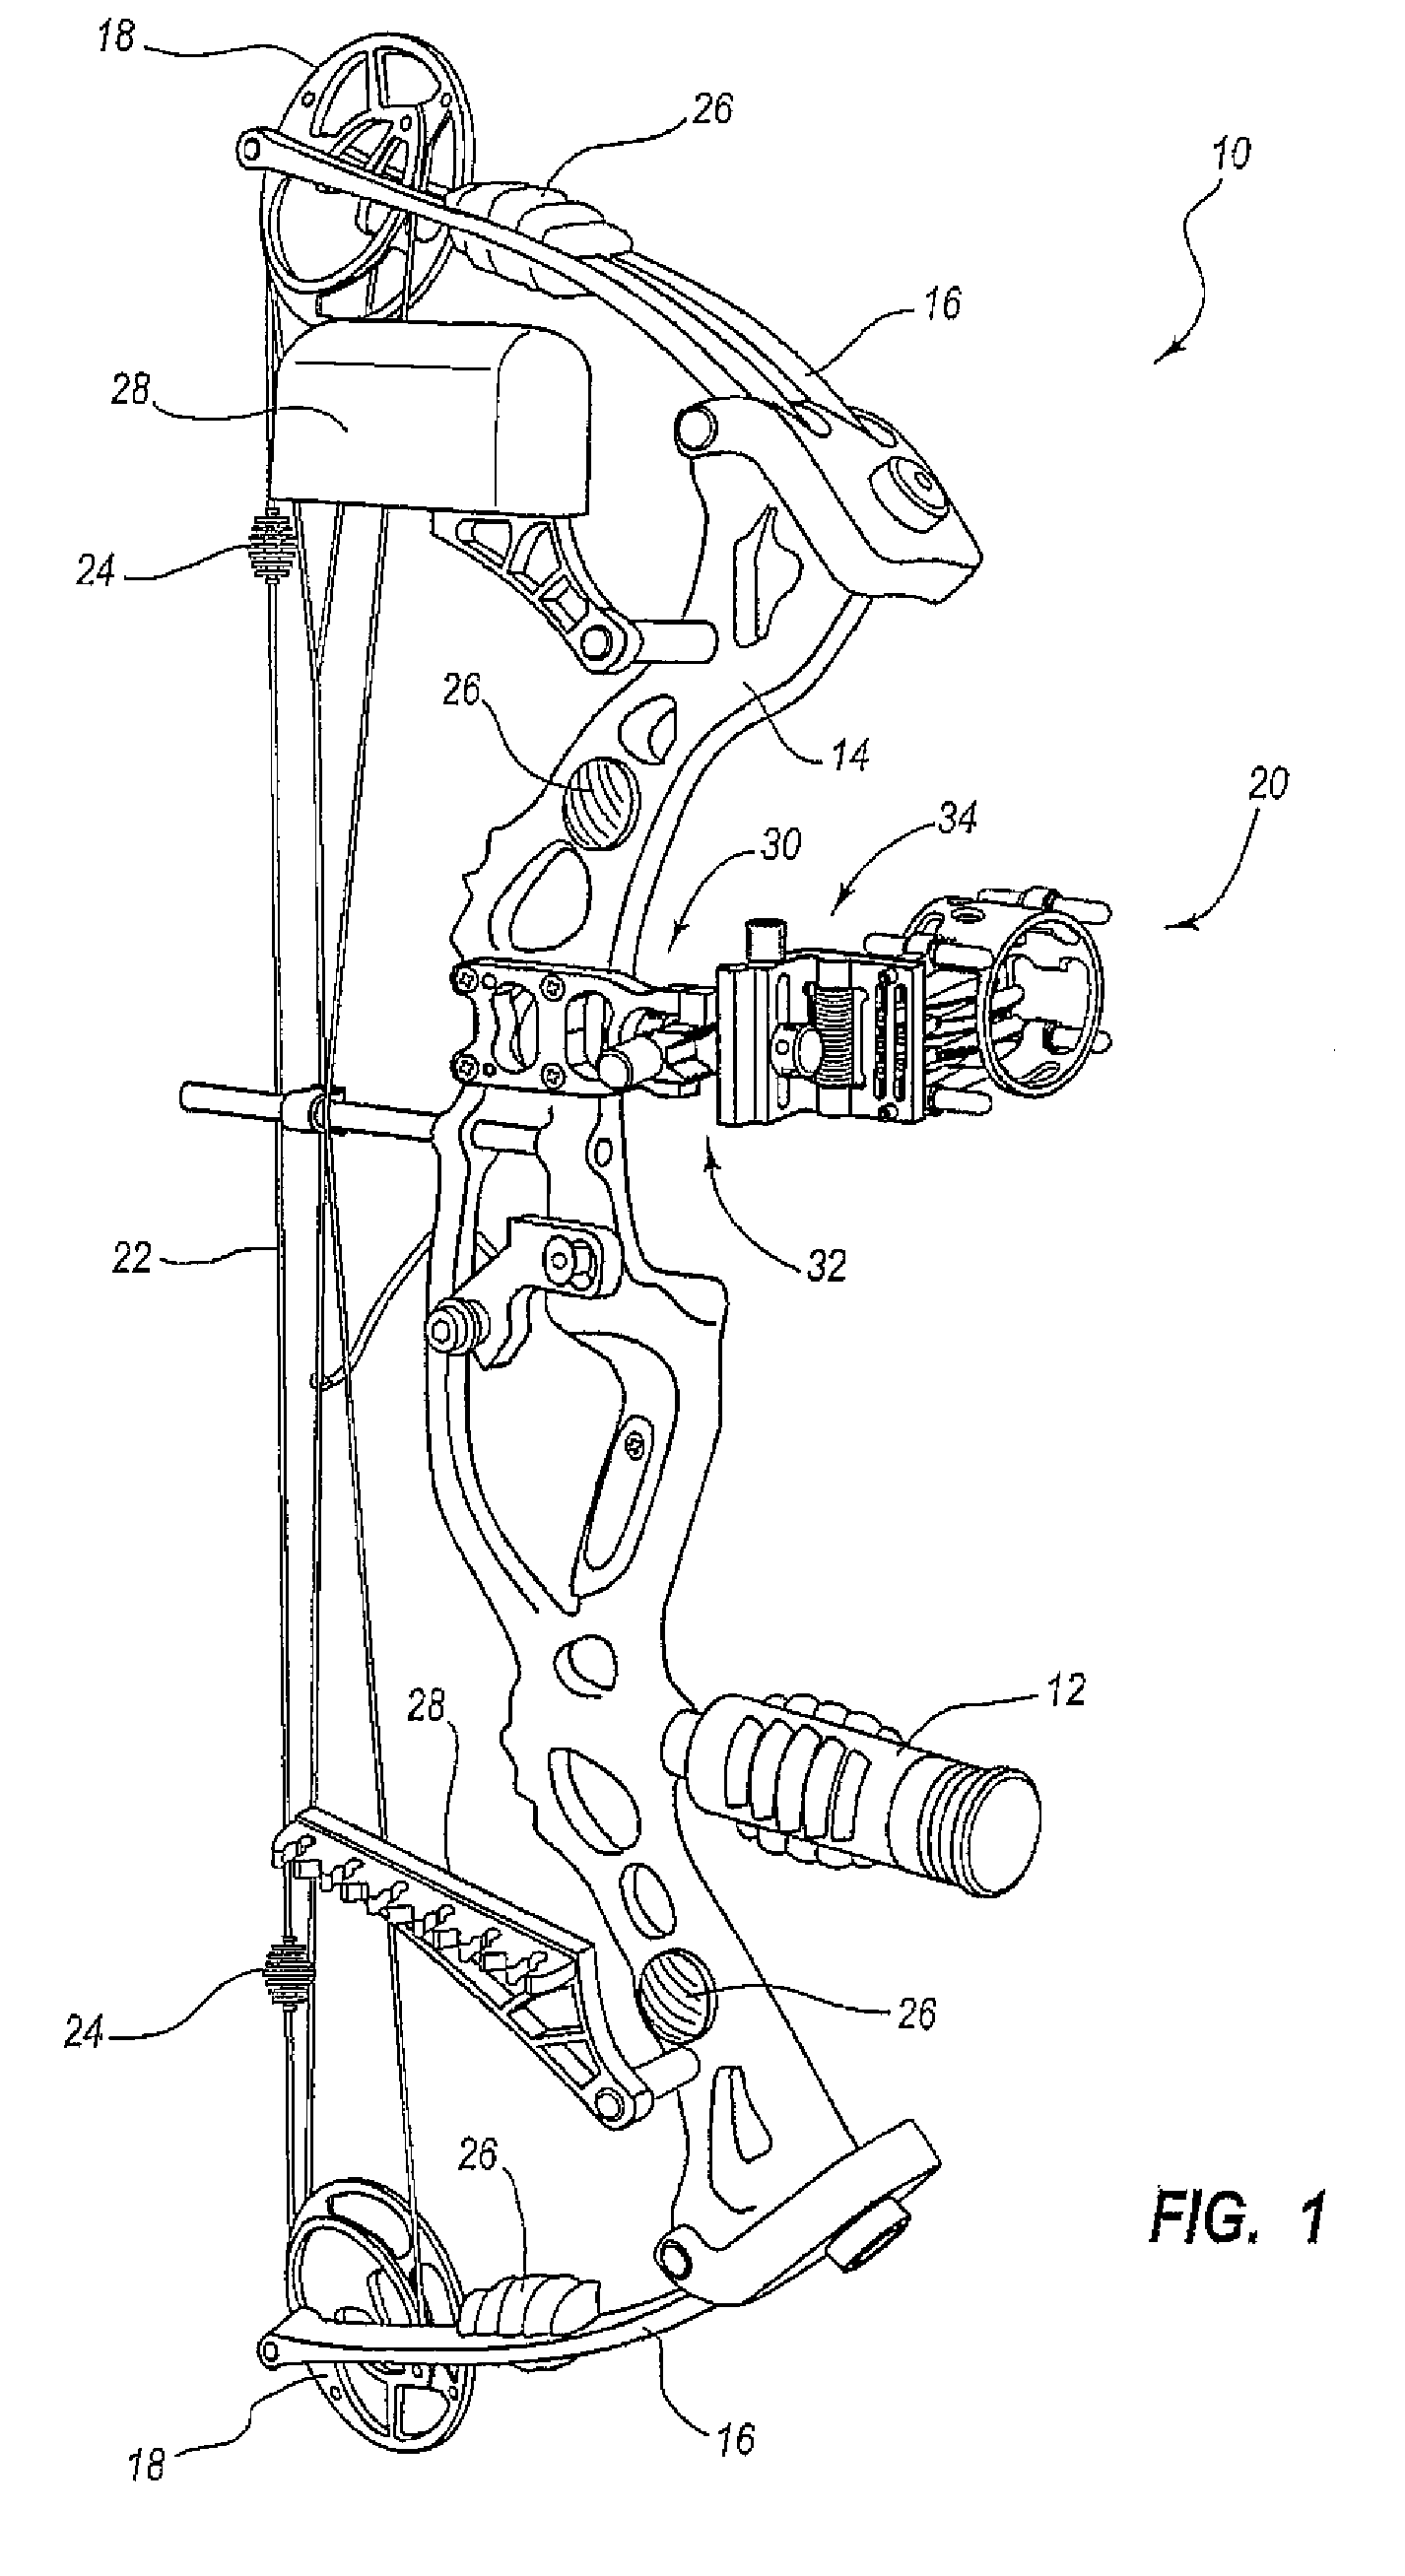 Adjustable bow sight apparatus